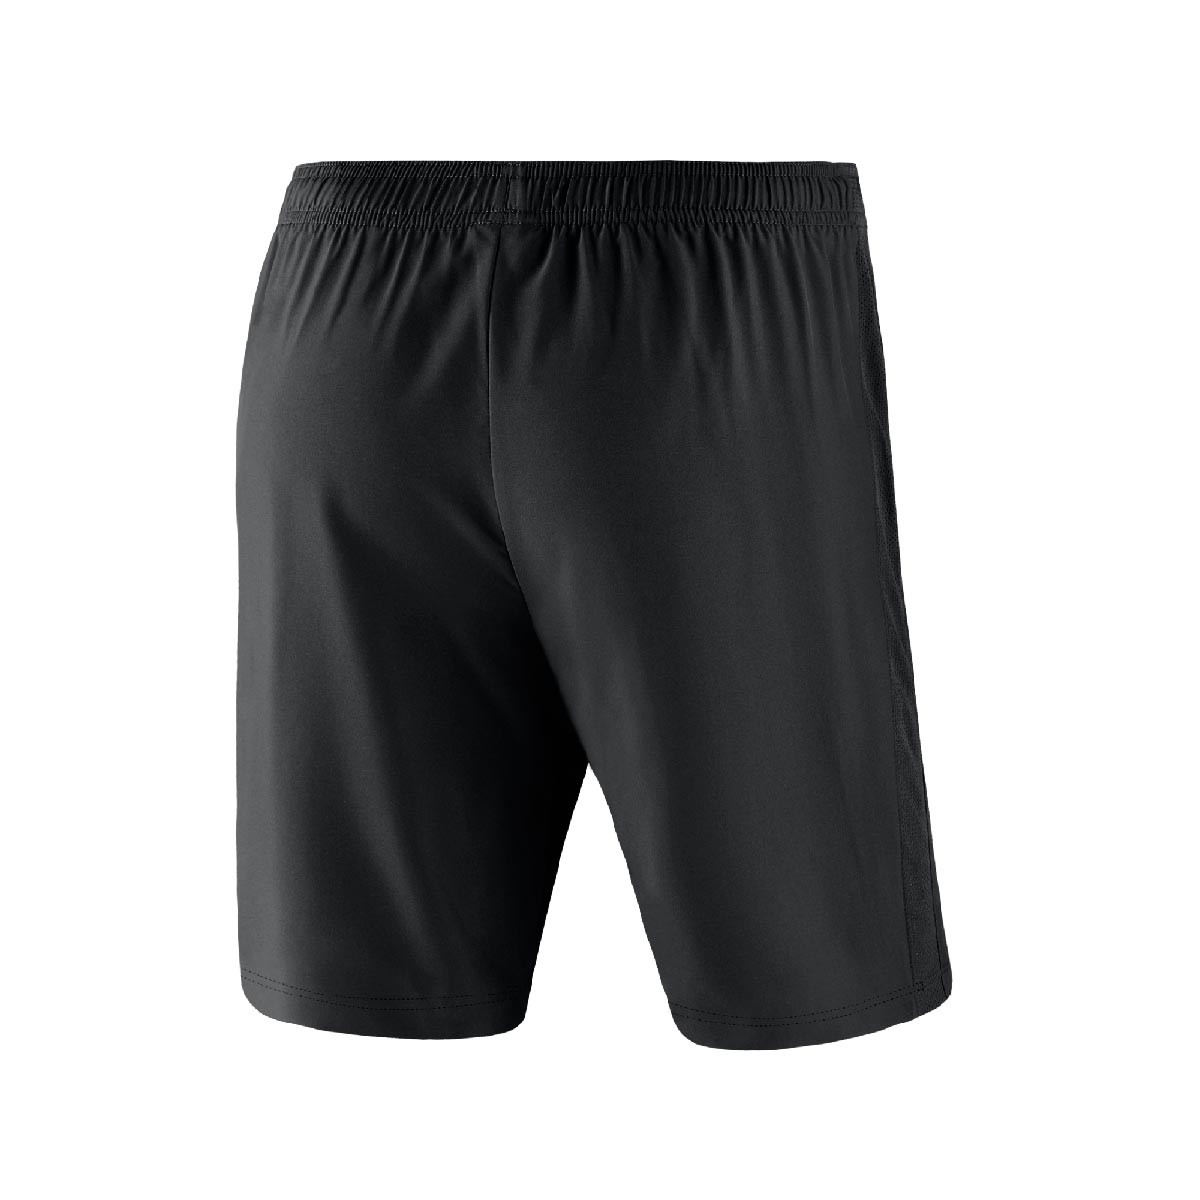 nike academy woven shorts cheap online